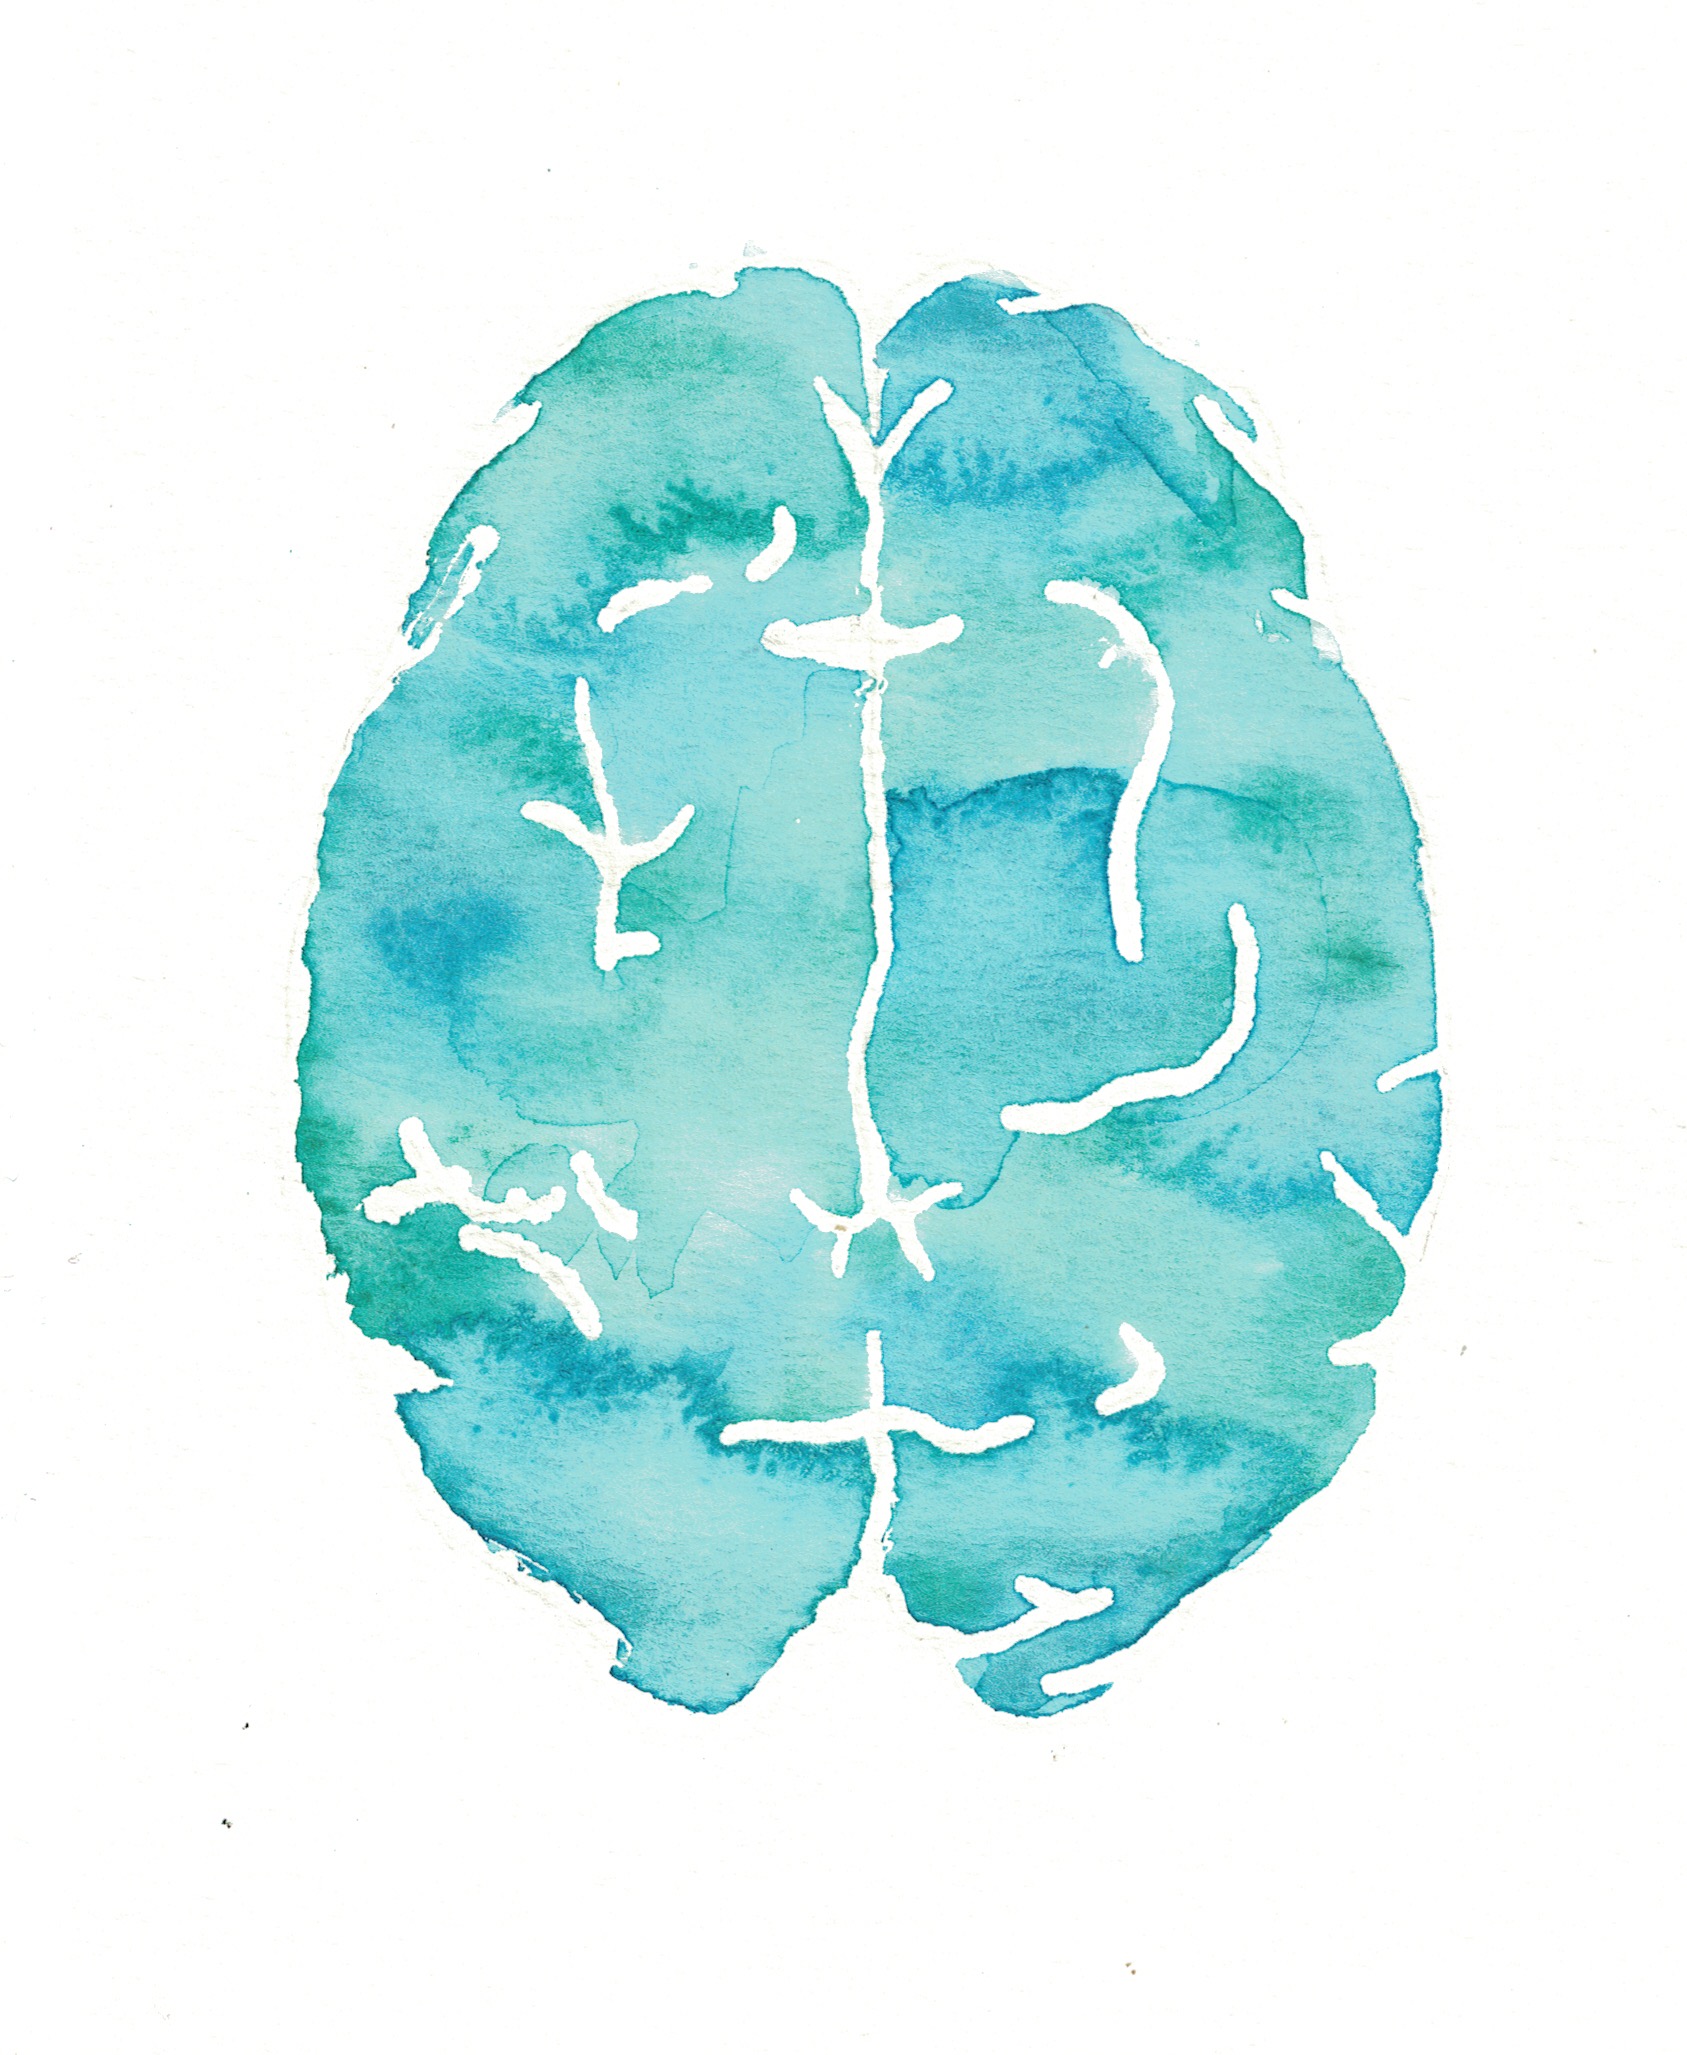 Watercolor painting of brain